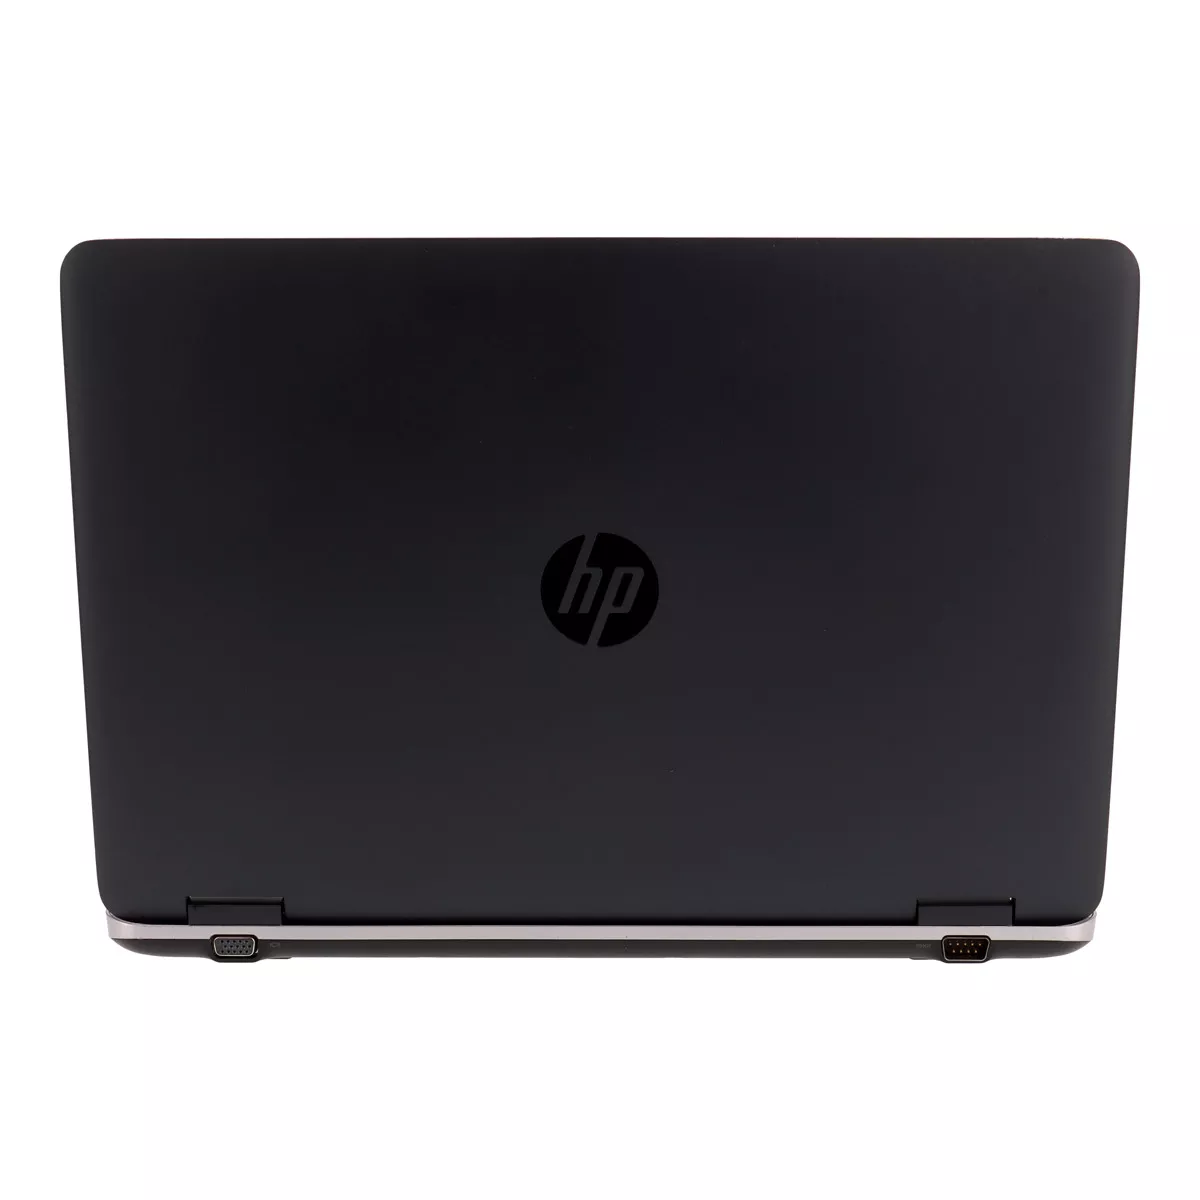 HP ProBook 650 G2 Core i5 6300U 2,40 GHz 240 GB M.2 SSD Webcam B